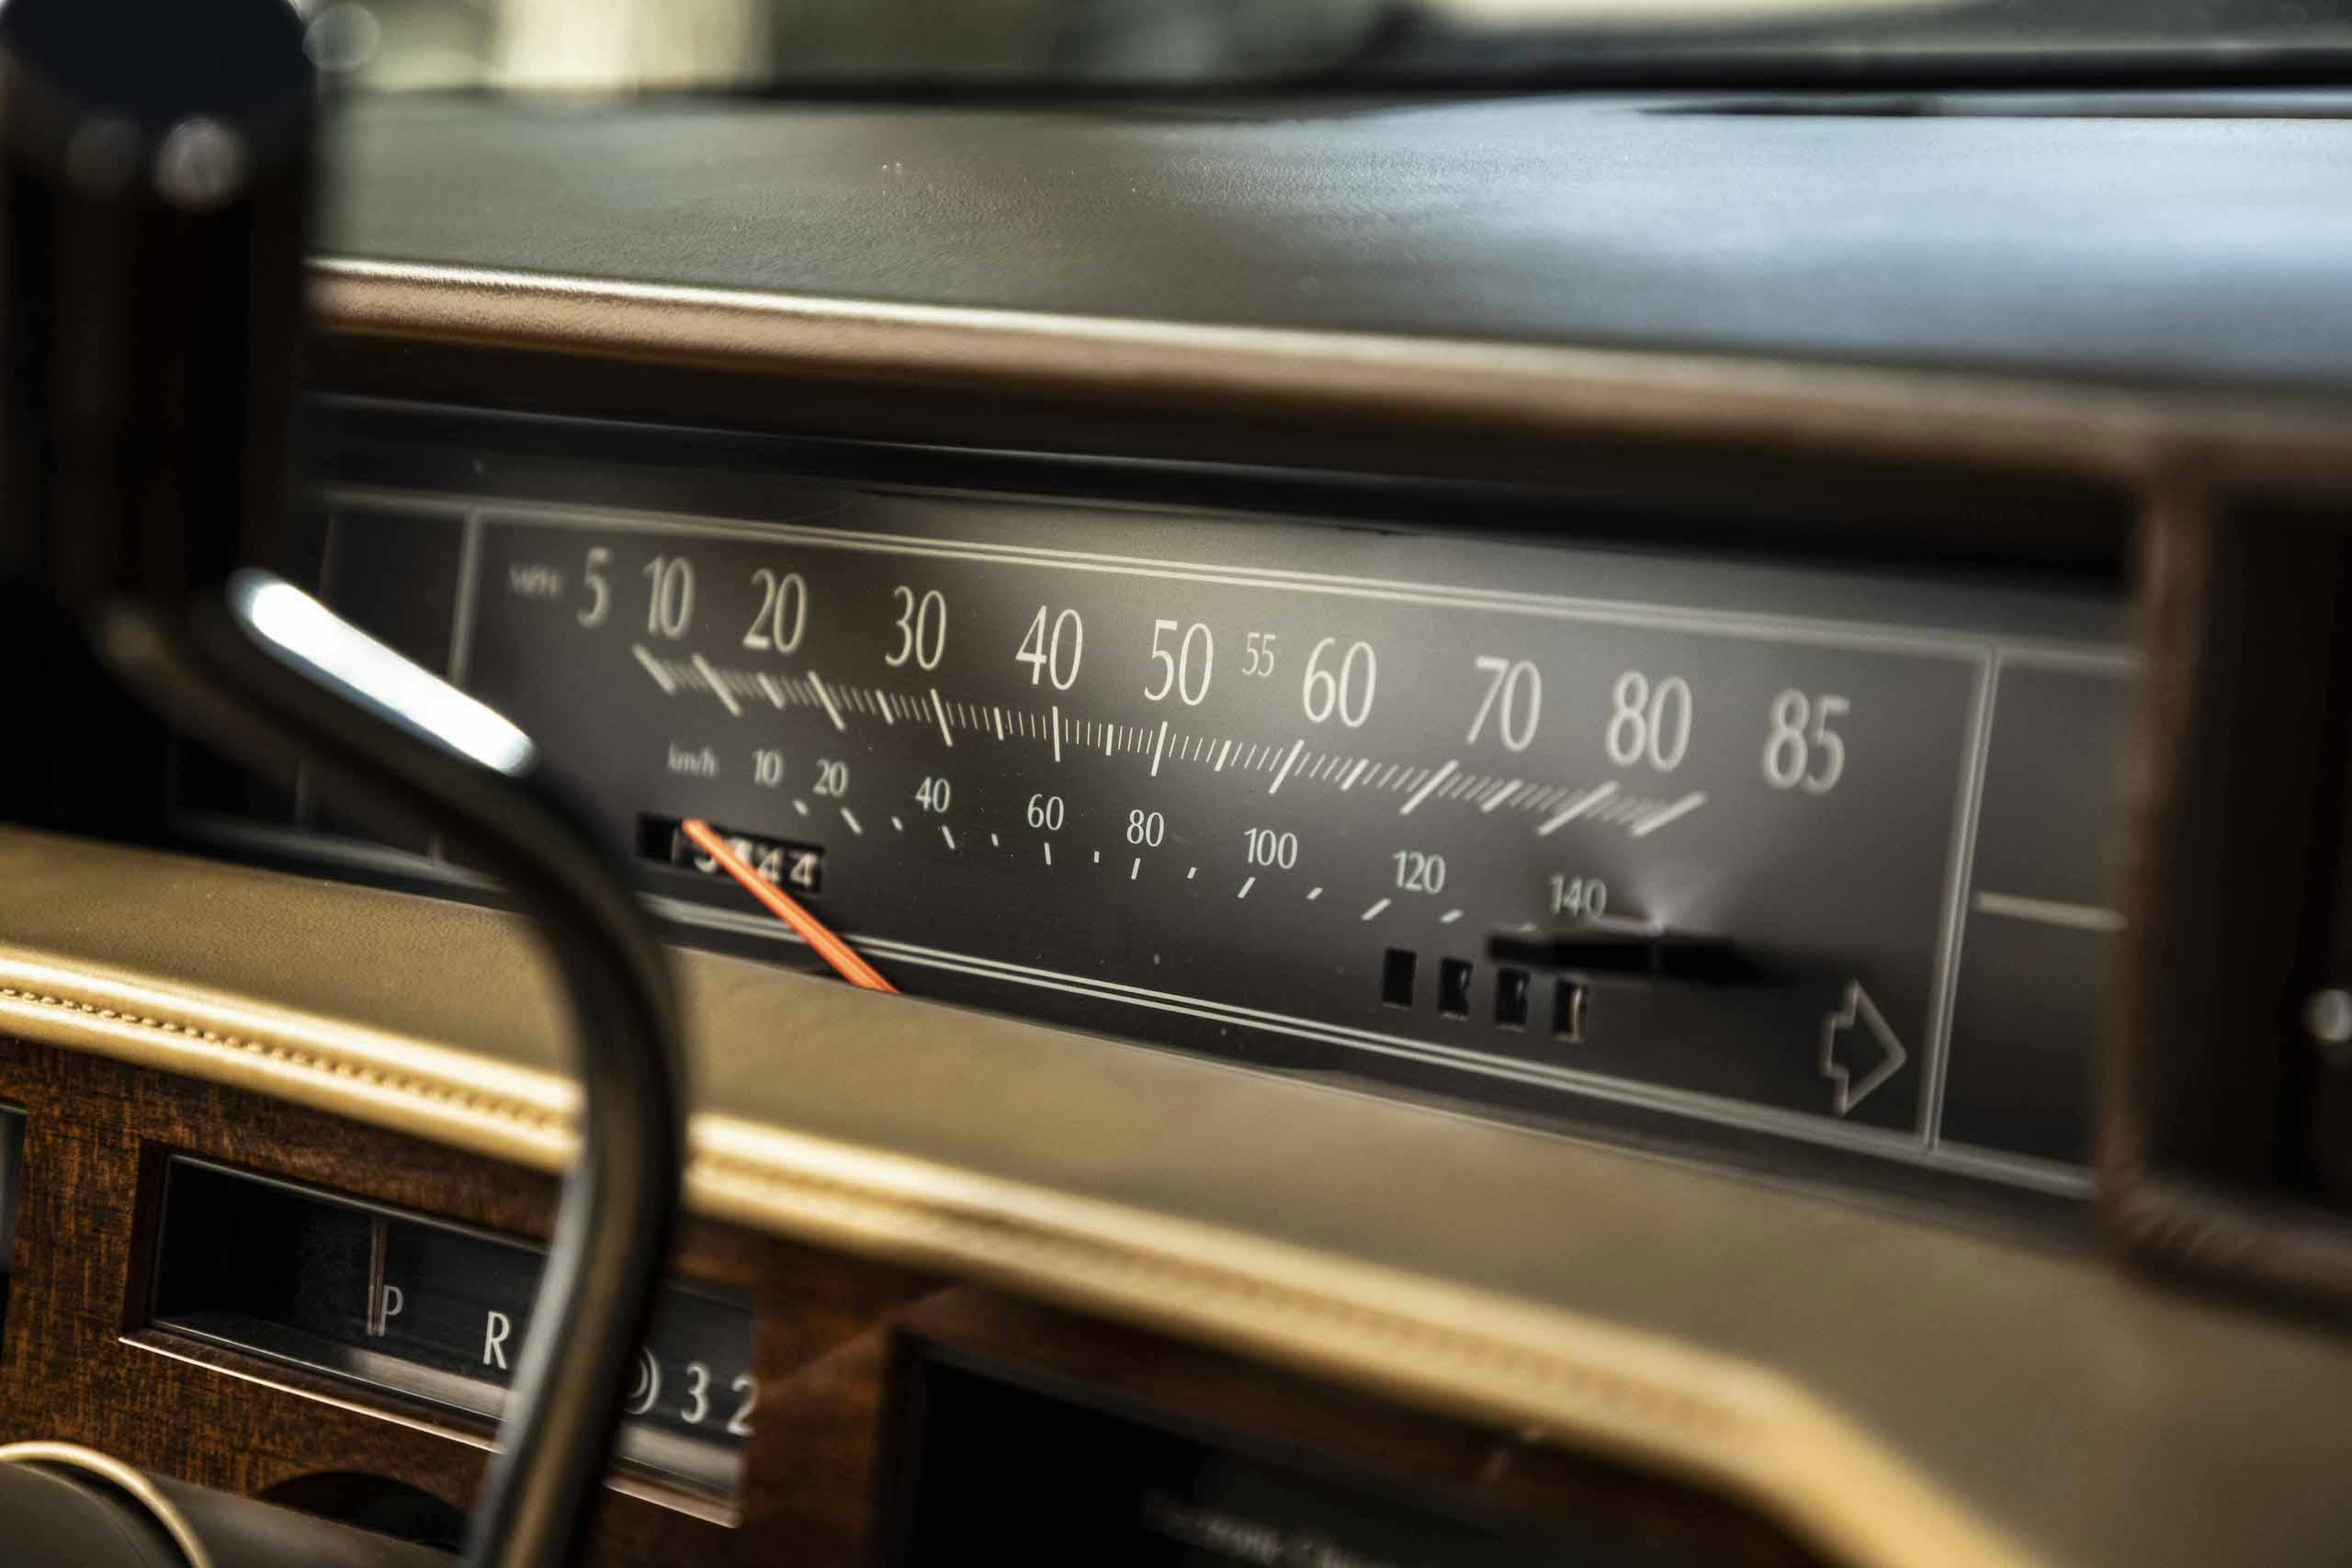 1986 Cadillac Coupe DeVille radio